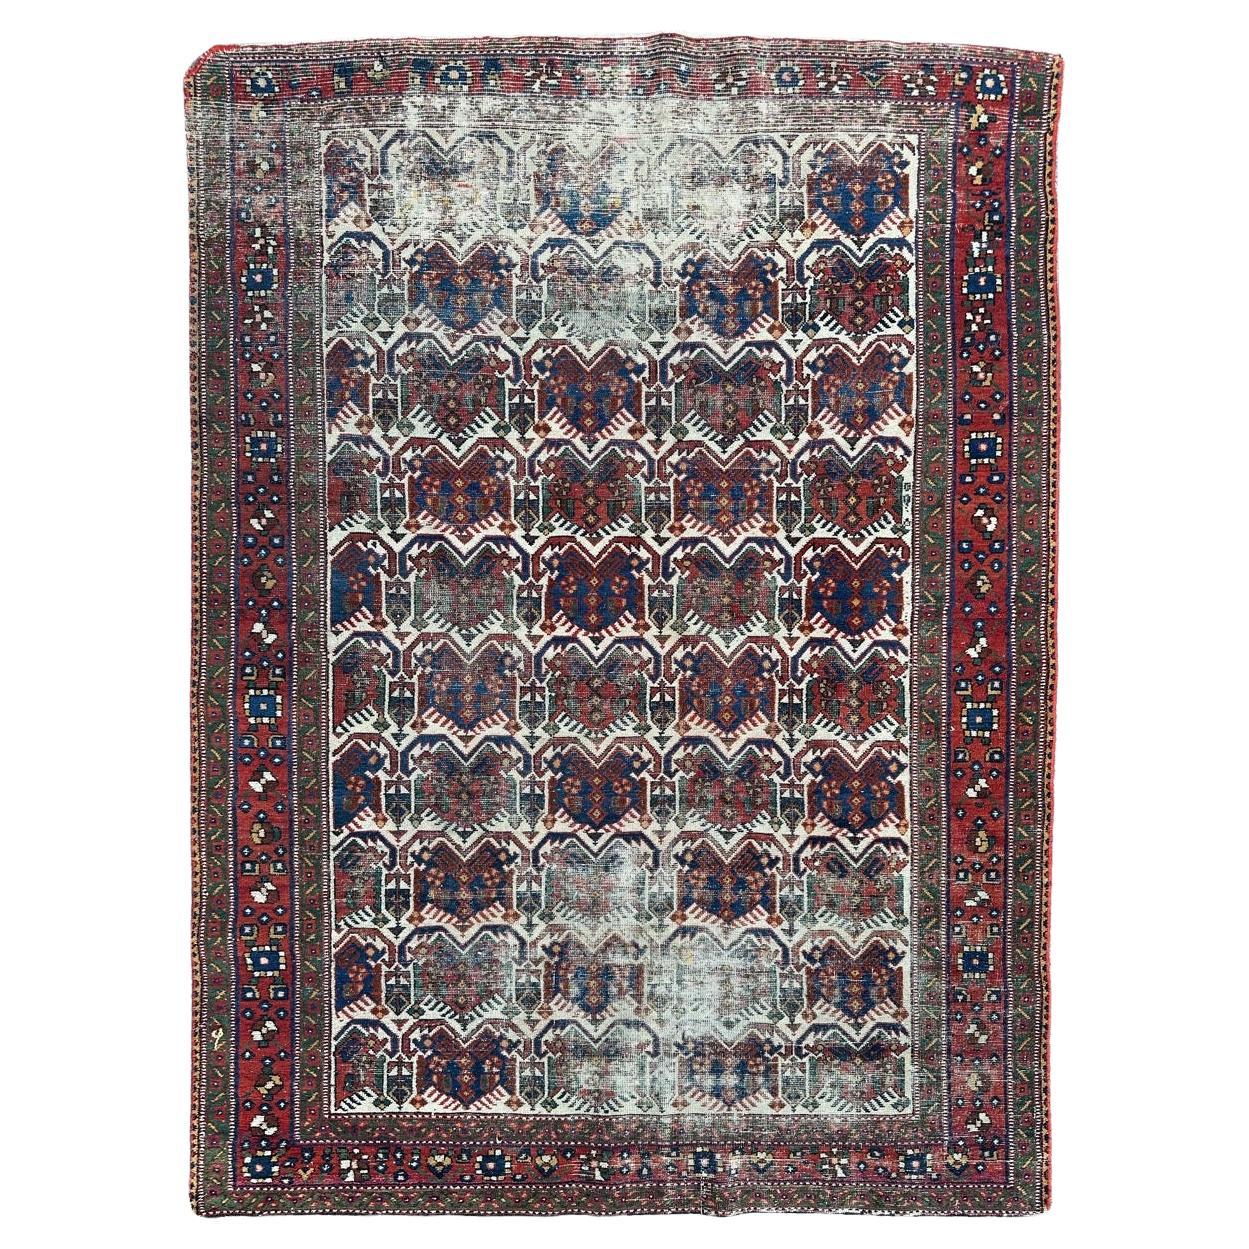 Bobyrug’s pretty antique distressed Afshar rug 